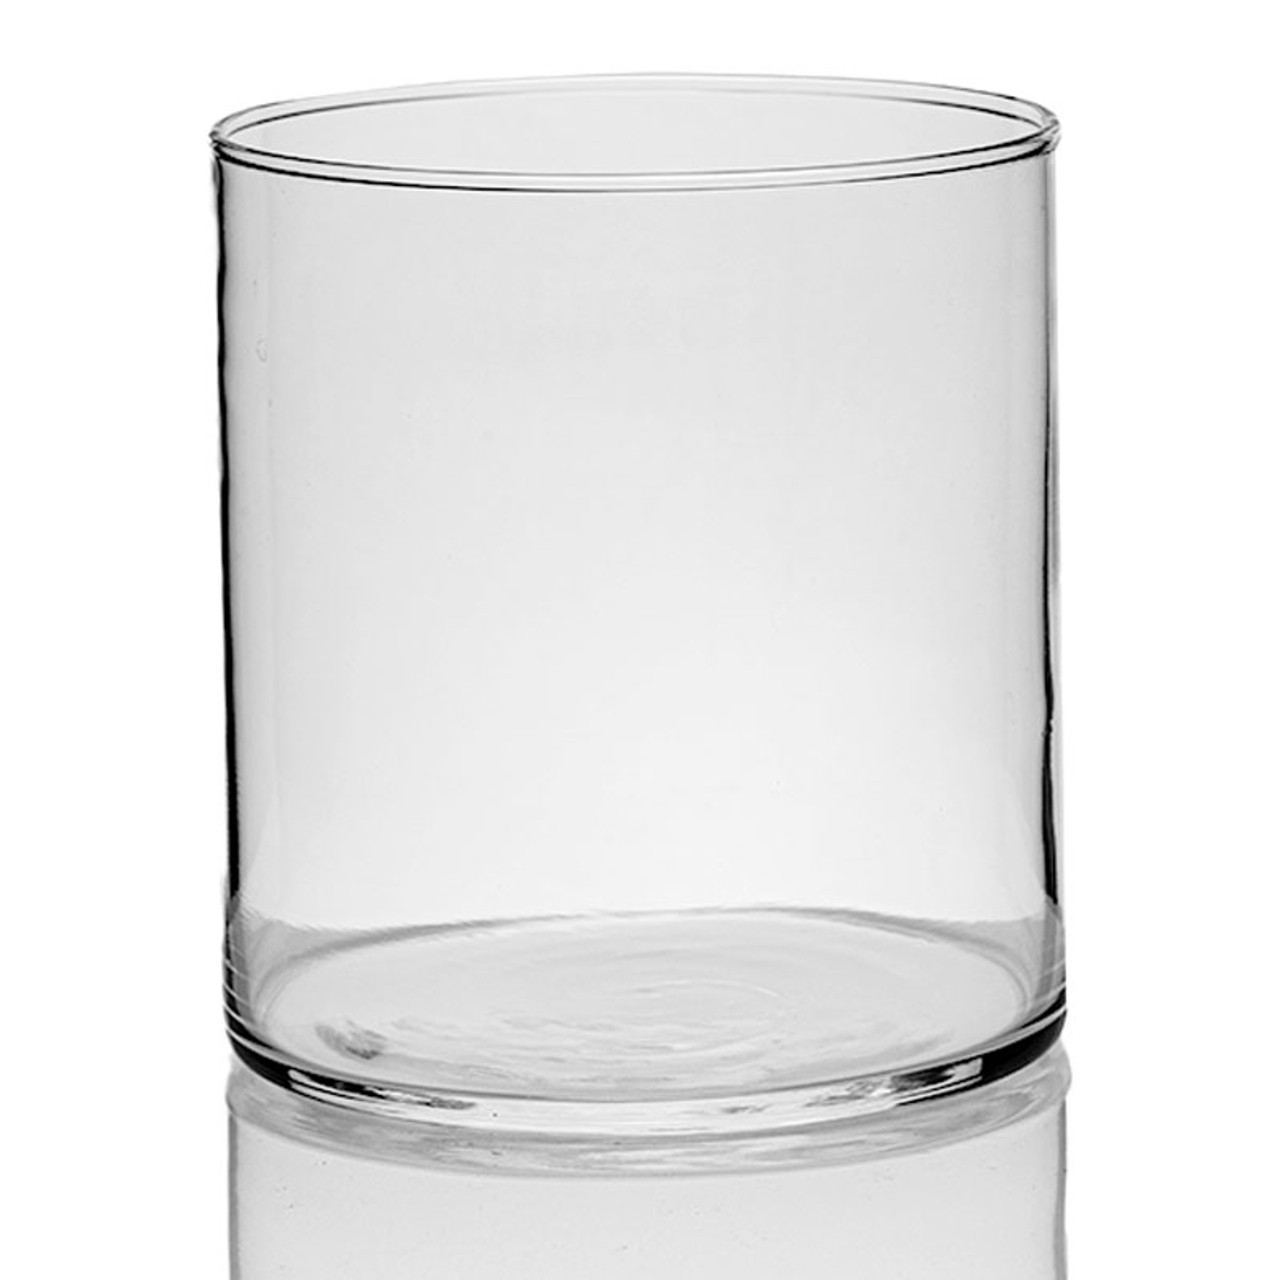 Libbey 92455 16 oz Mason Jar w/ Measurement Markings - Plastic, Clear